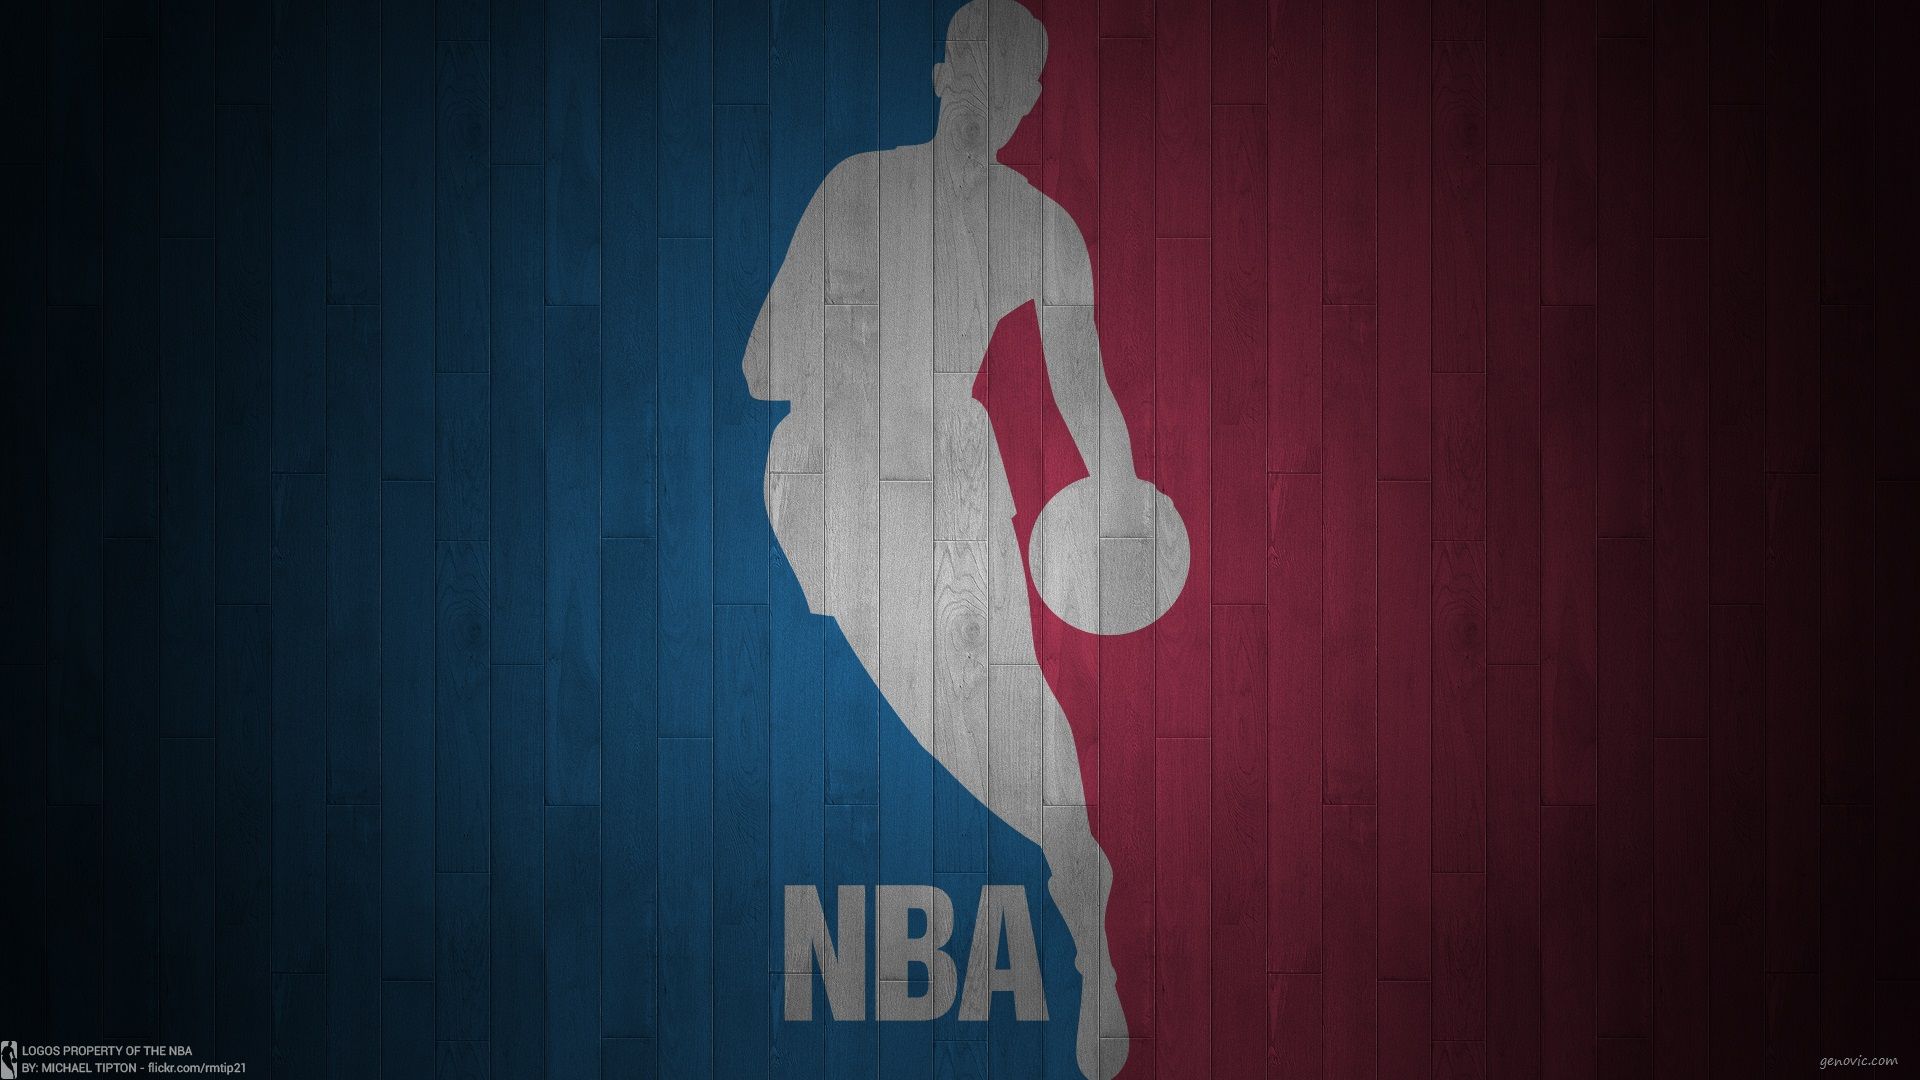 NBA Wallpaper. HD Background Image. Photo